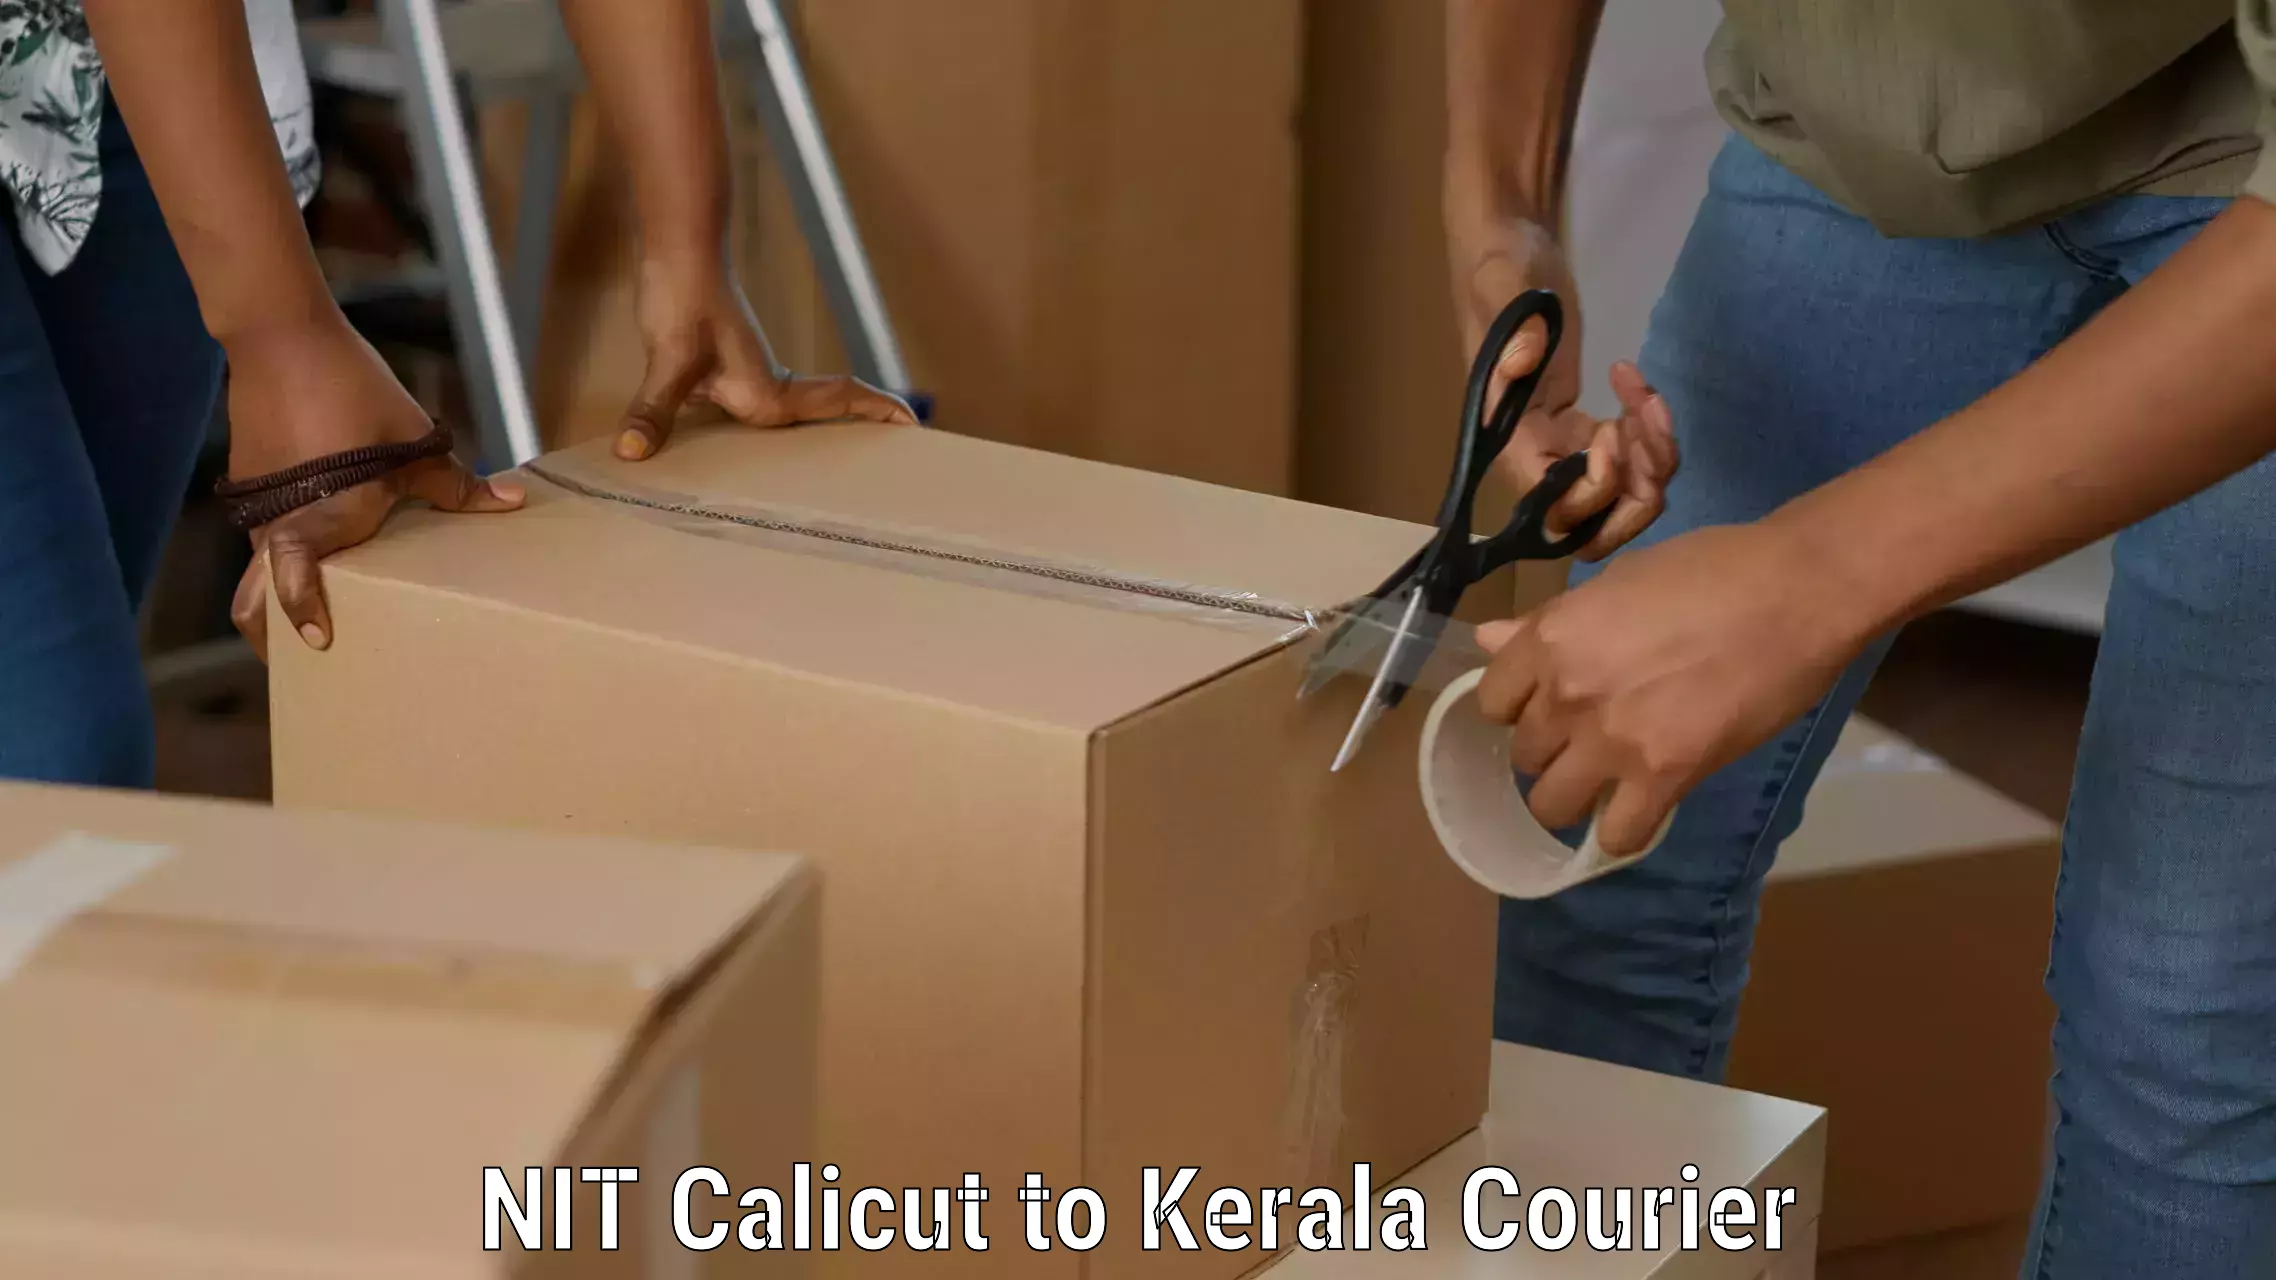 Business shipping needs NIT Calicut to Kerala